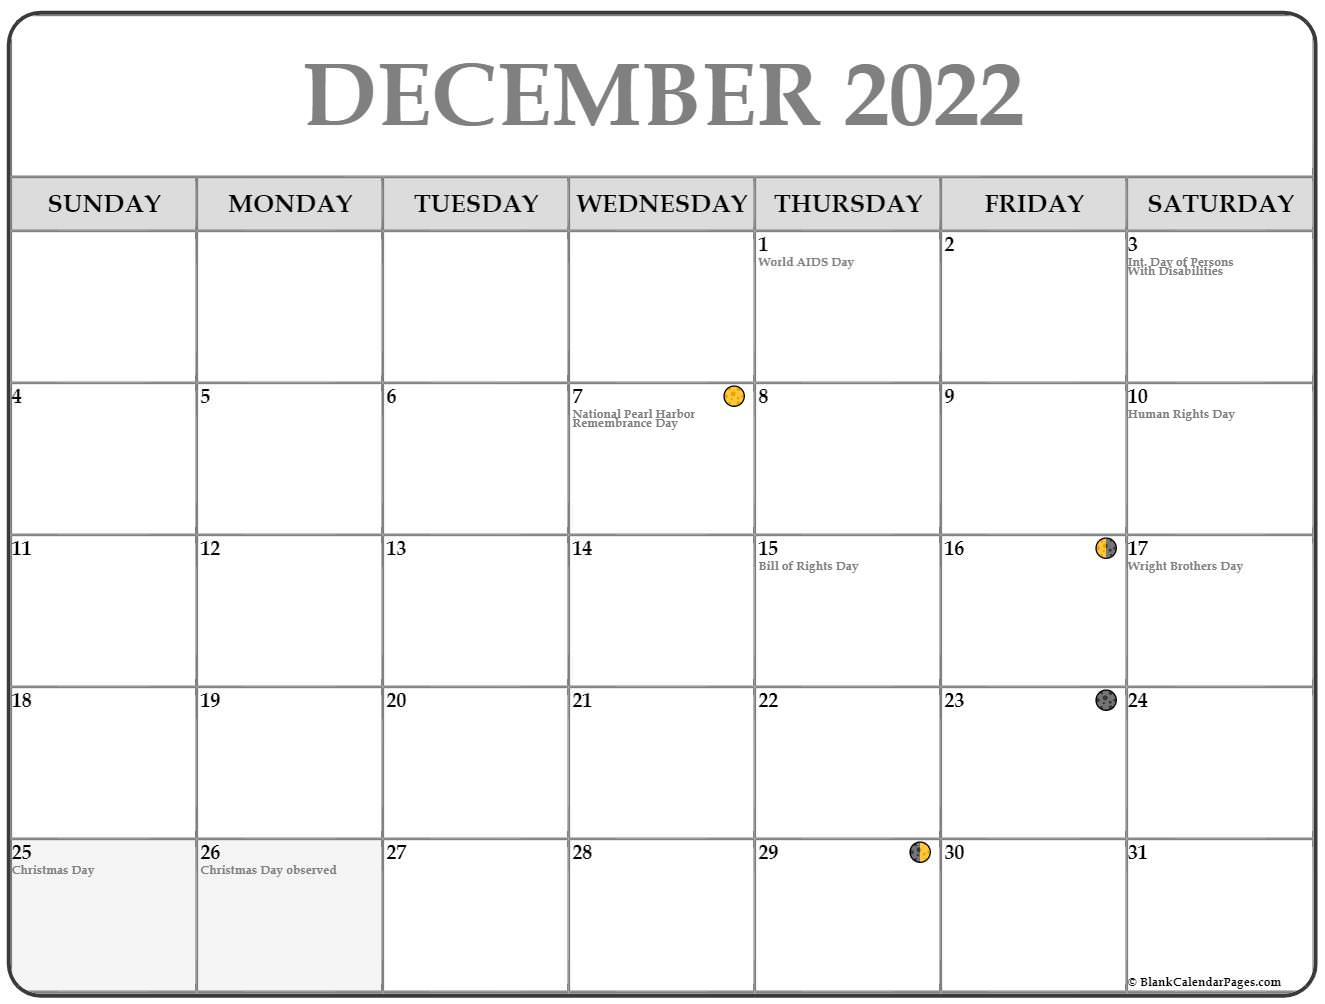 December 2022 Lunar Calendar | Moon Phase Calendar Printable Calendar December 2022